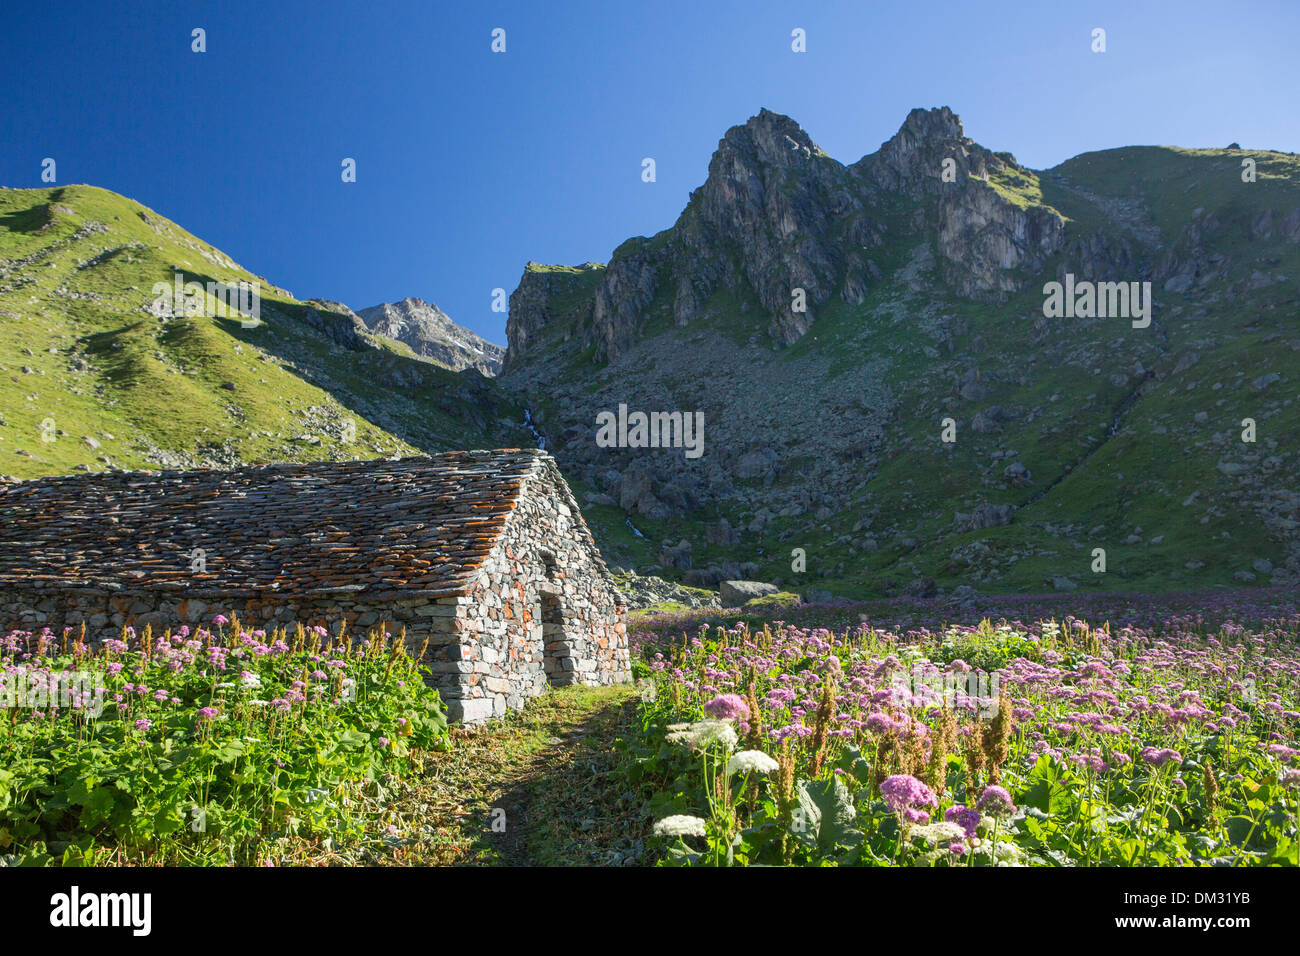 Switzerland, Europe, mountain, mountains, canton, Valais, hut, alp hut, stone hut, Lac de Louvie, Grand Combin, Petit Combin Stock Photo